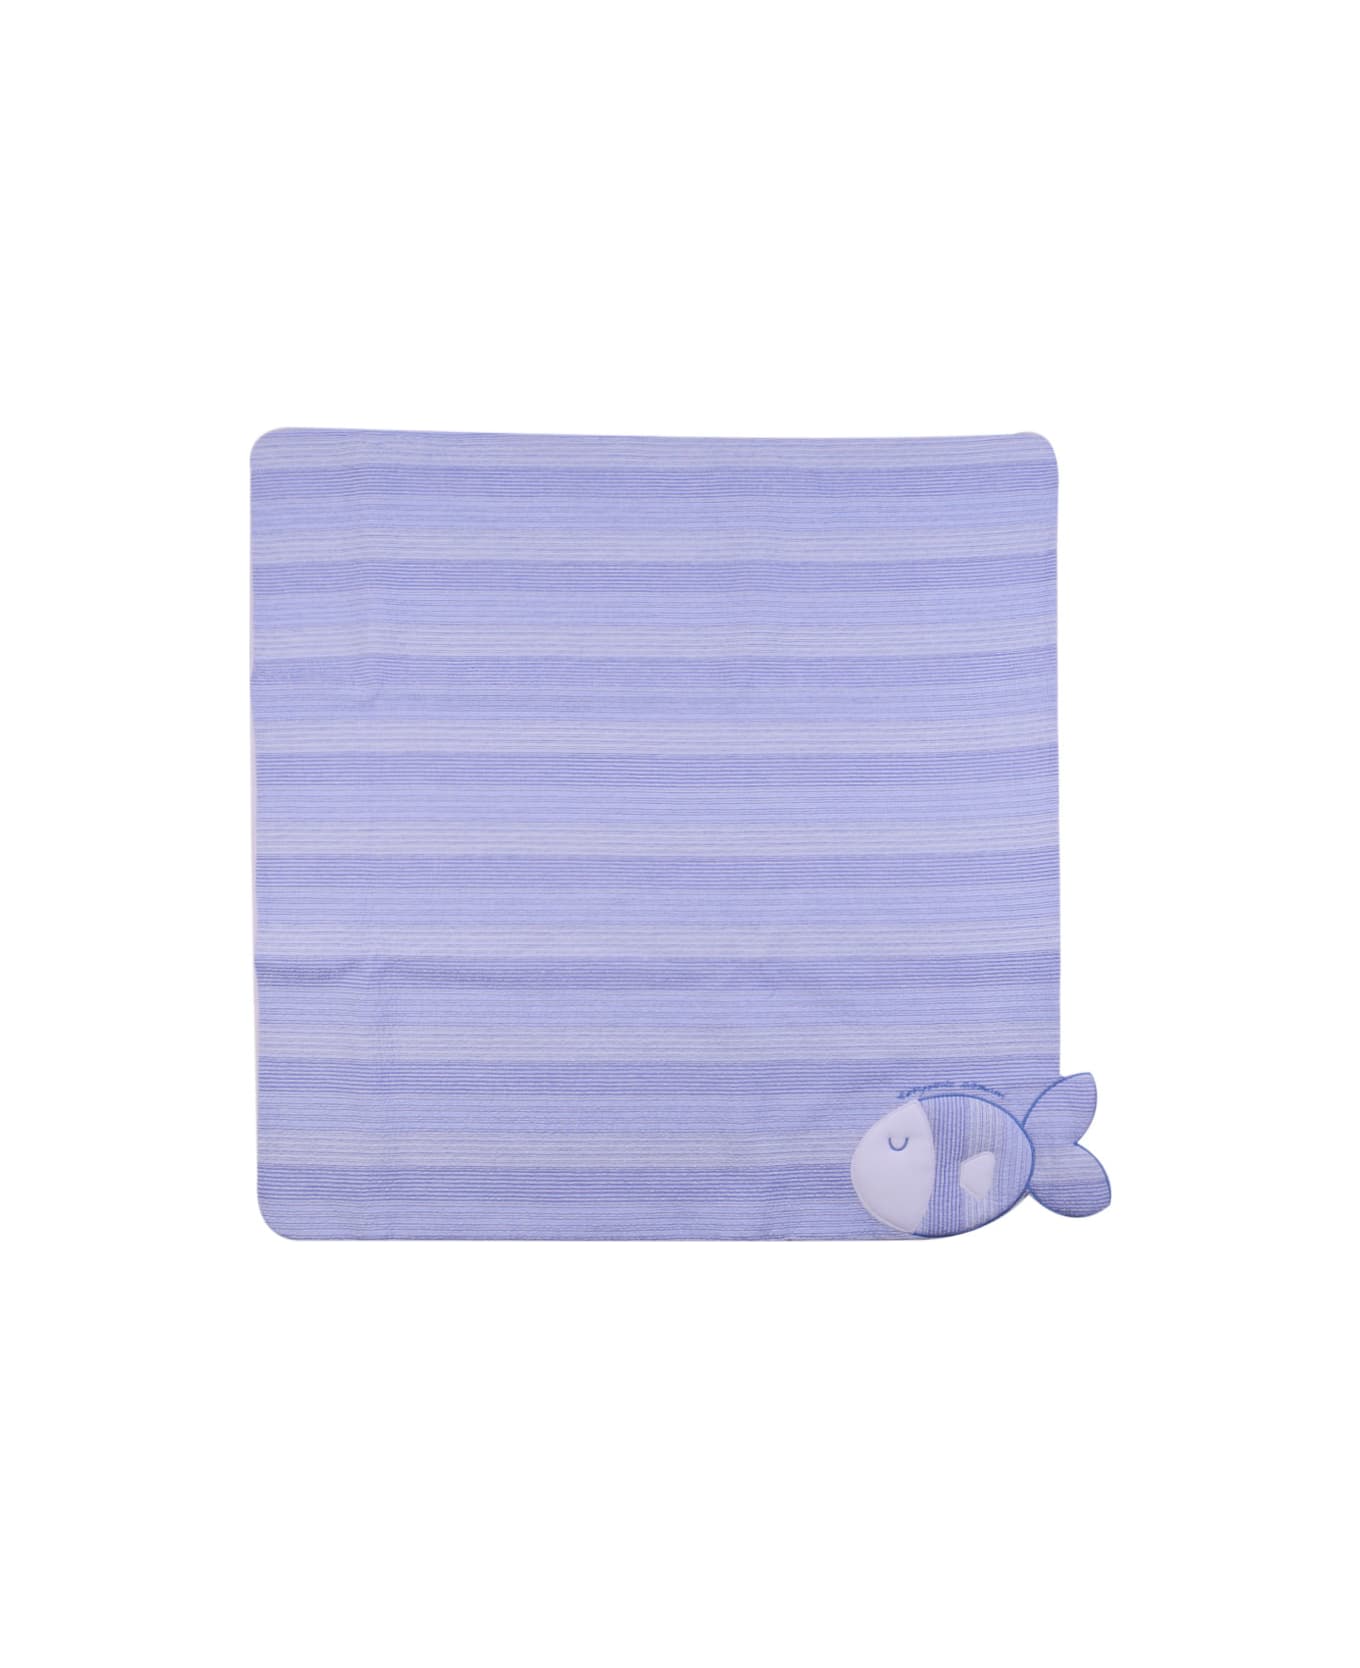 Emporio Armani Striped Cotton Blanket - Light blue